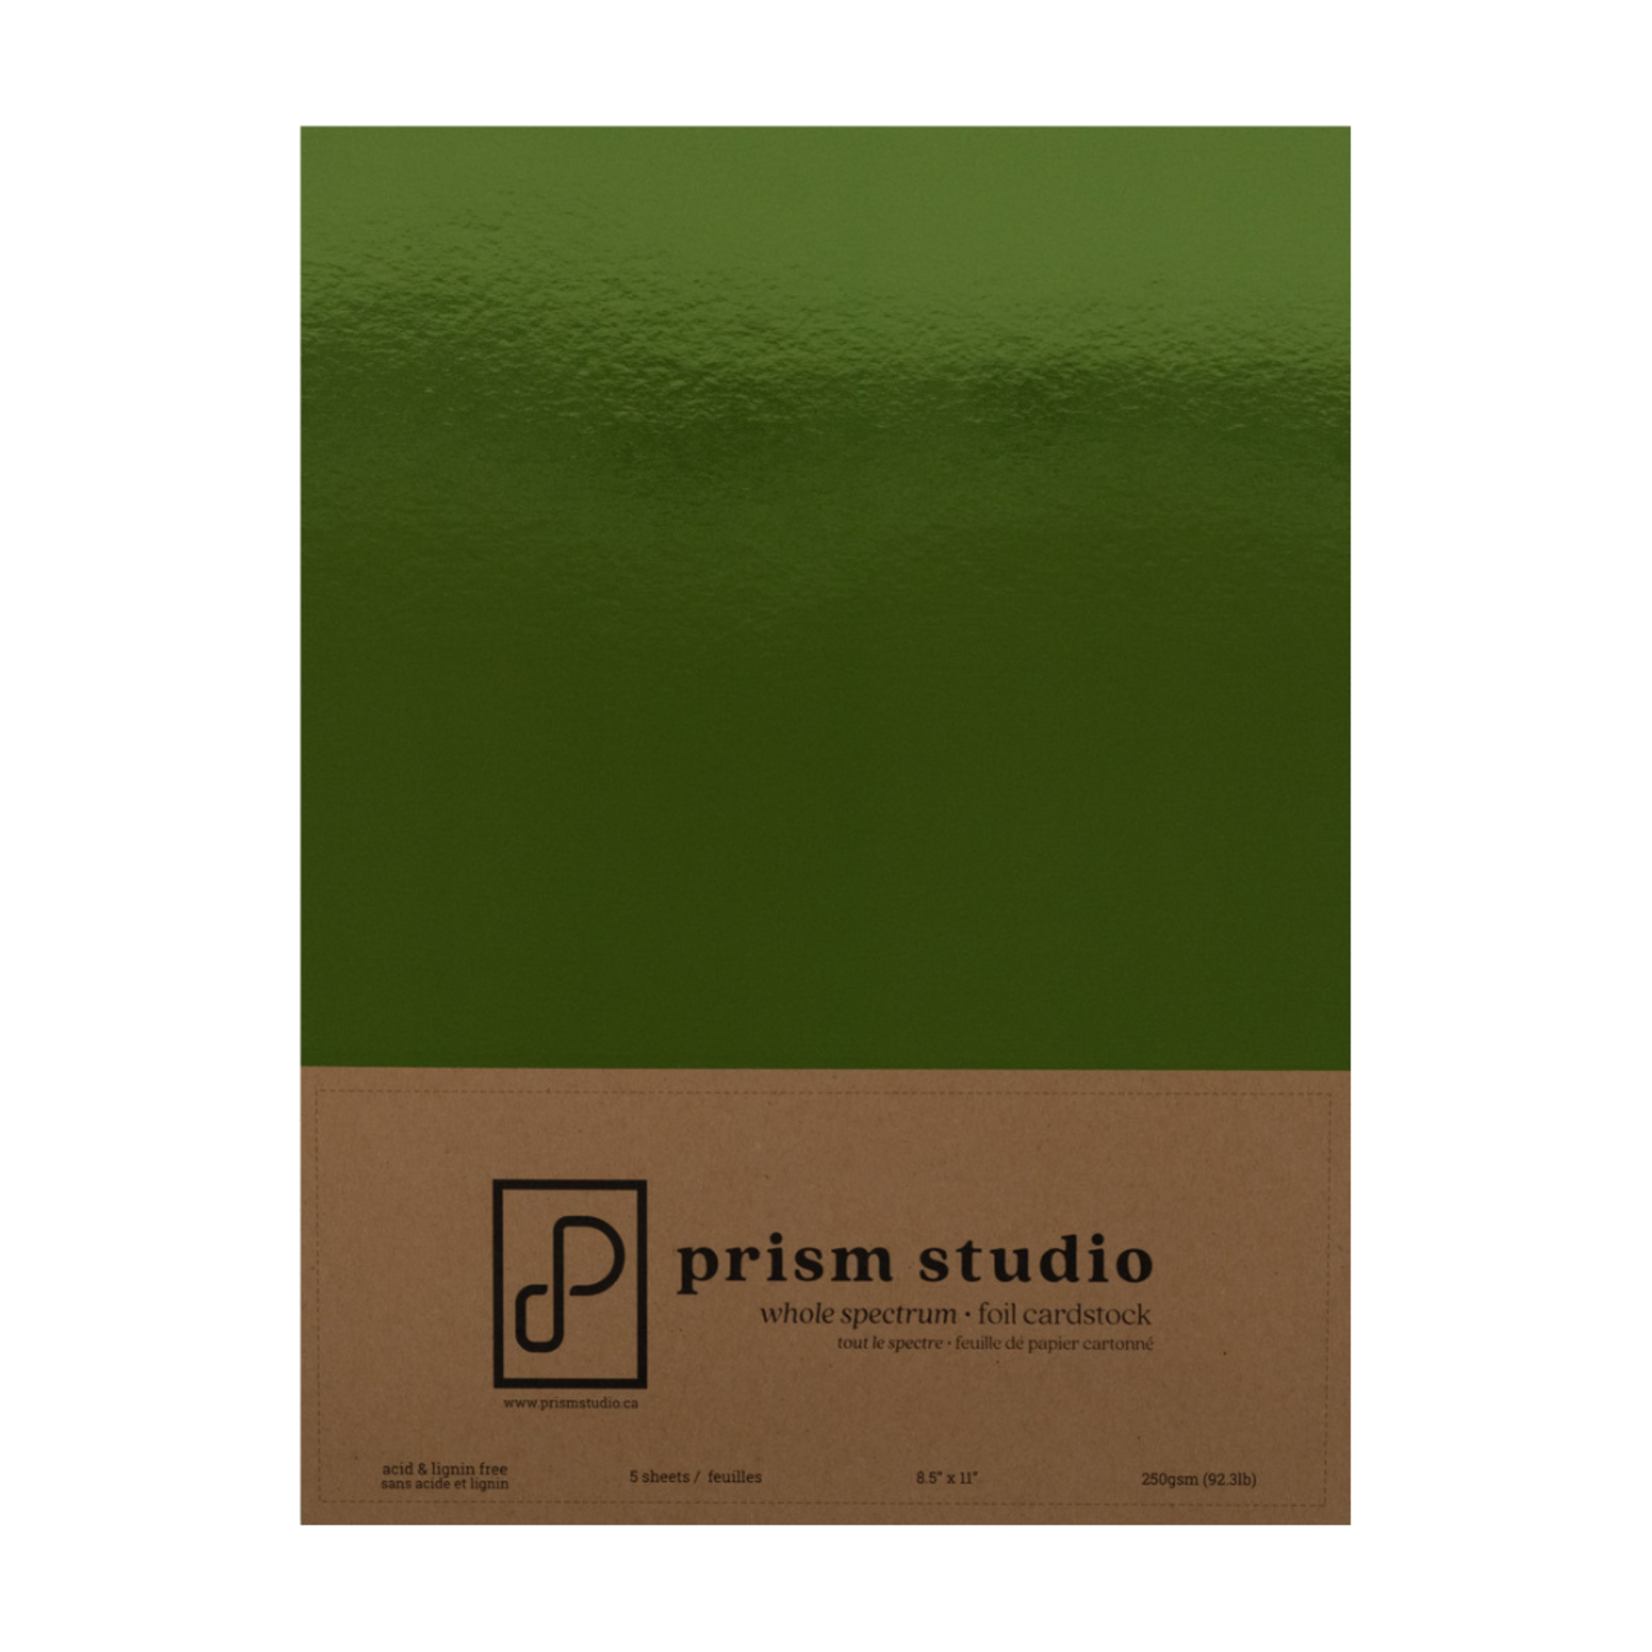 PRISM STUDIO PRISM STUDIO WHOLE SPECTRUM FOIL CARDSTOCK 8.5X11 EMERALD